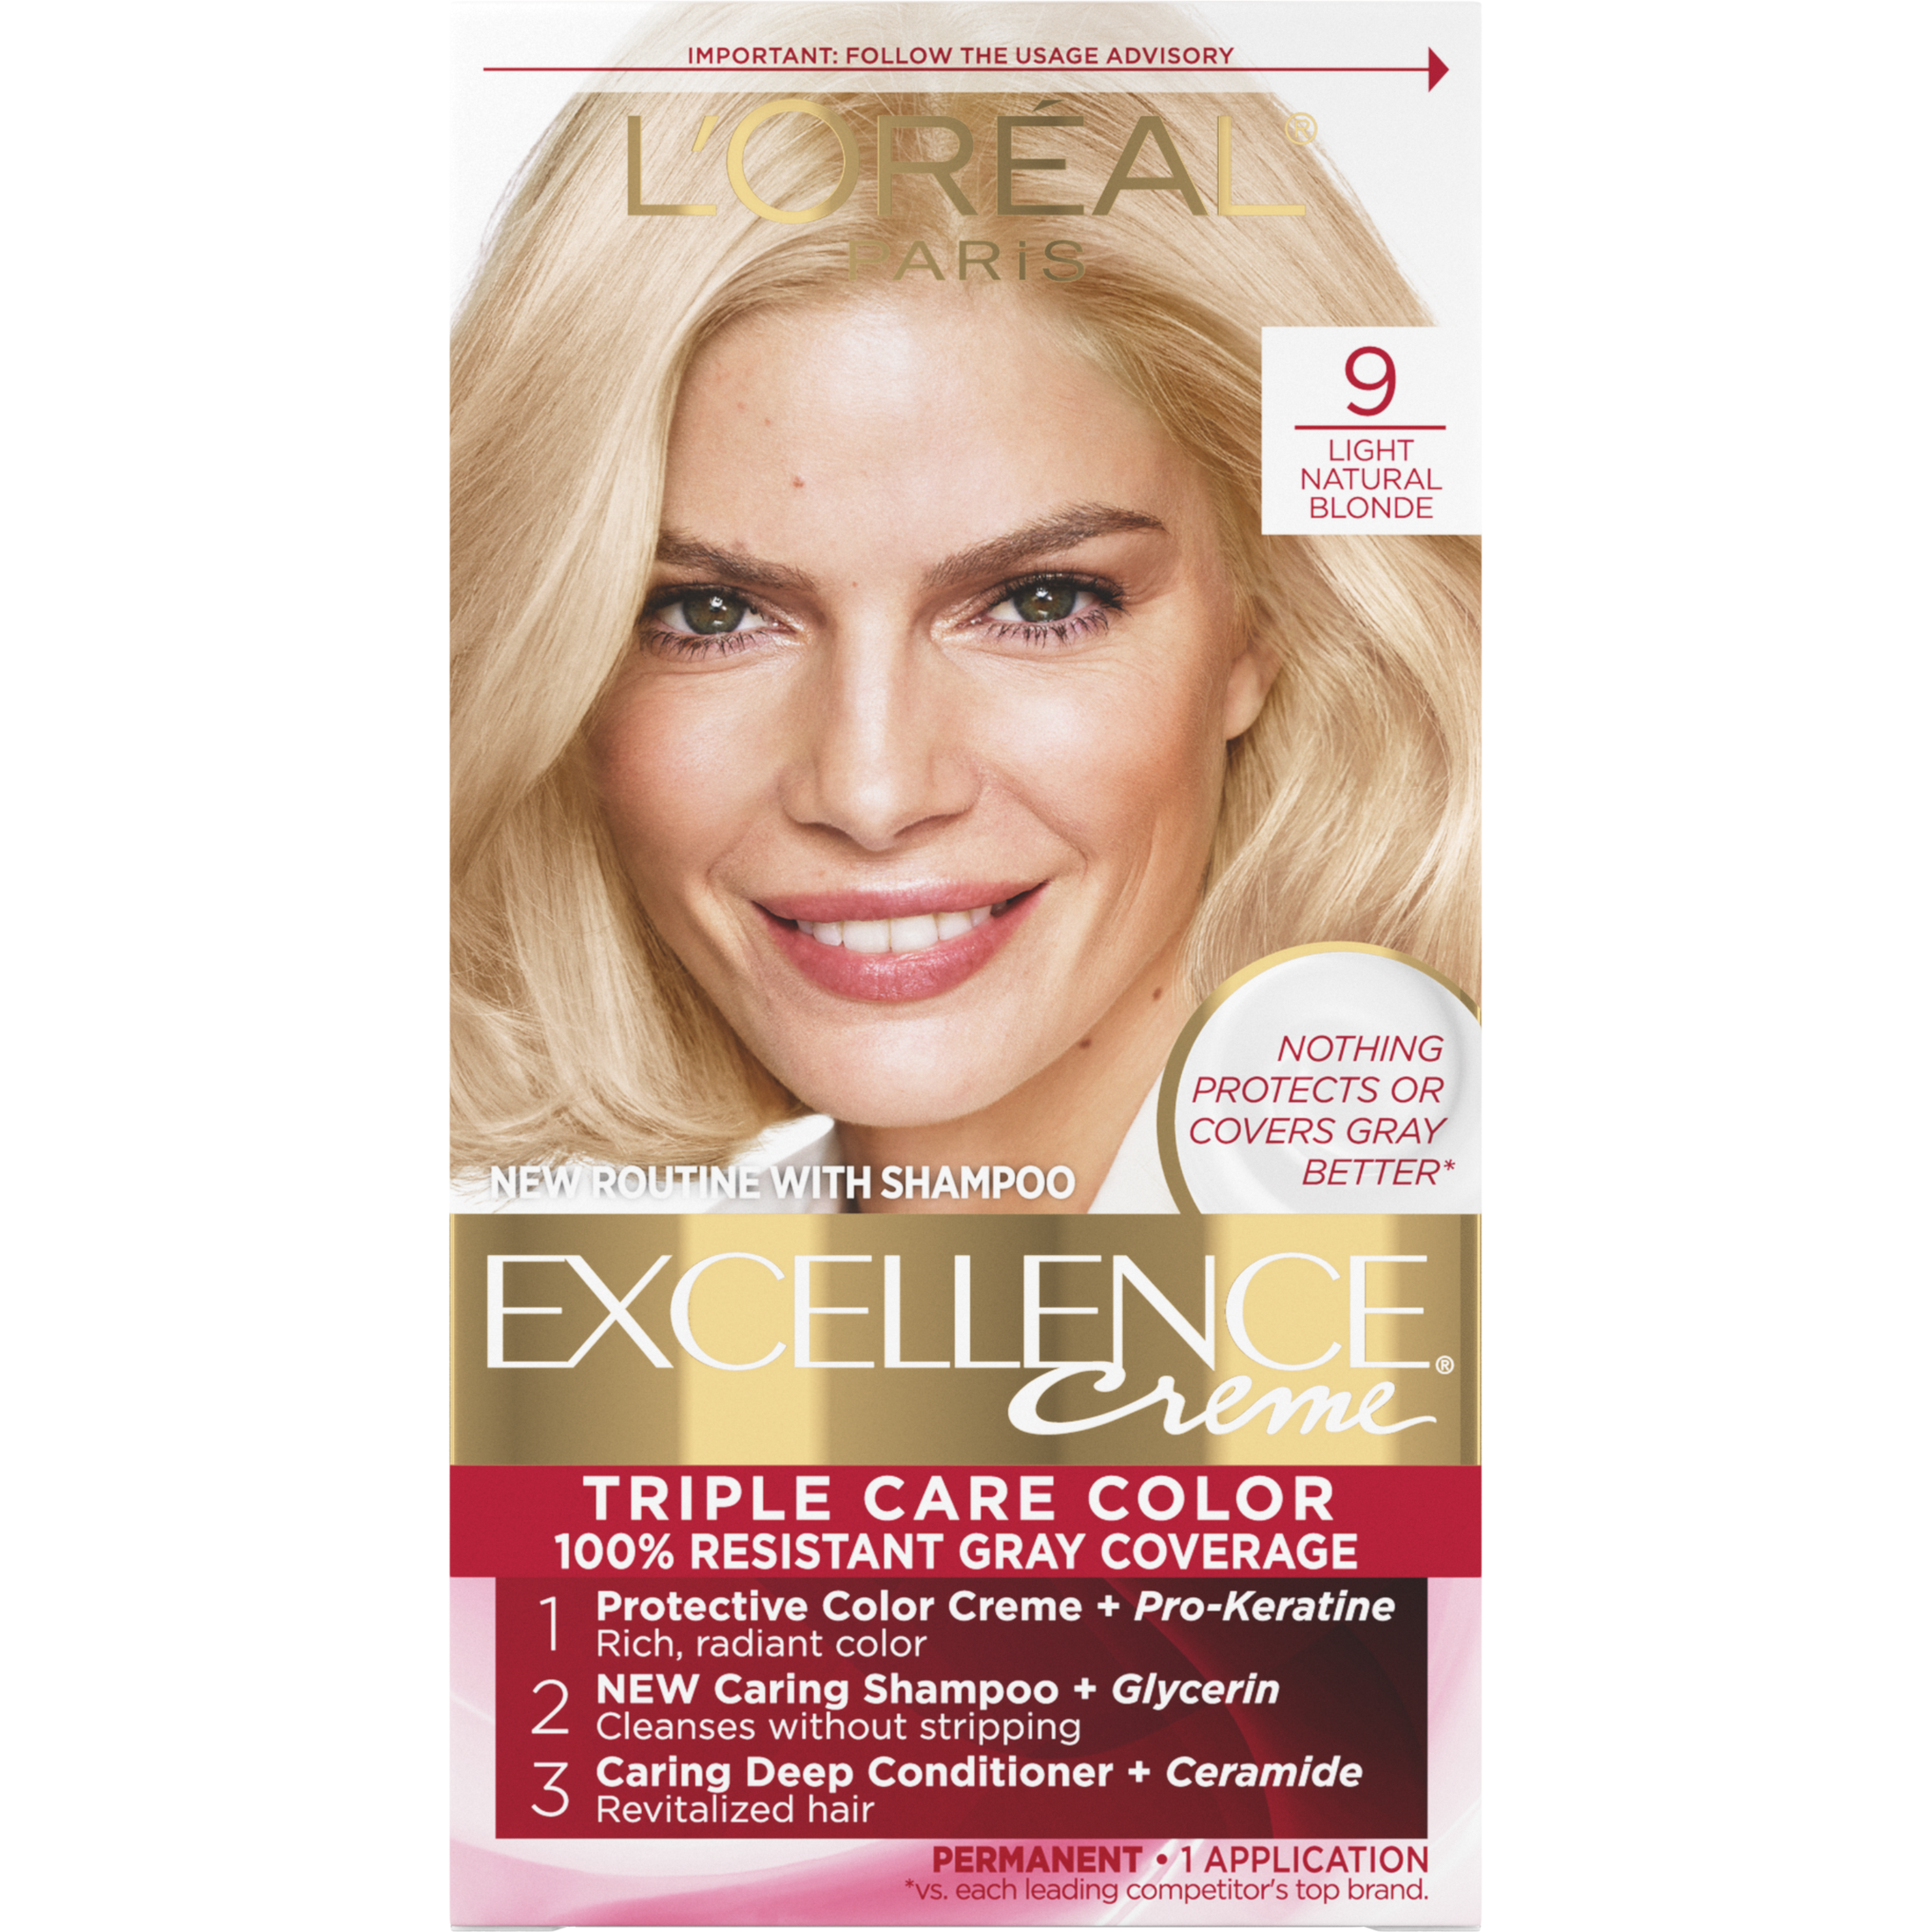 L'Oreal Paris Excellence Creme Permanent Hair Color, 9 Light Natural Blonde - image 1 of 8